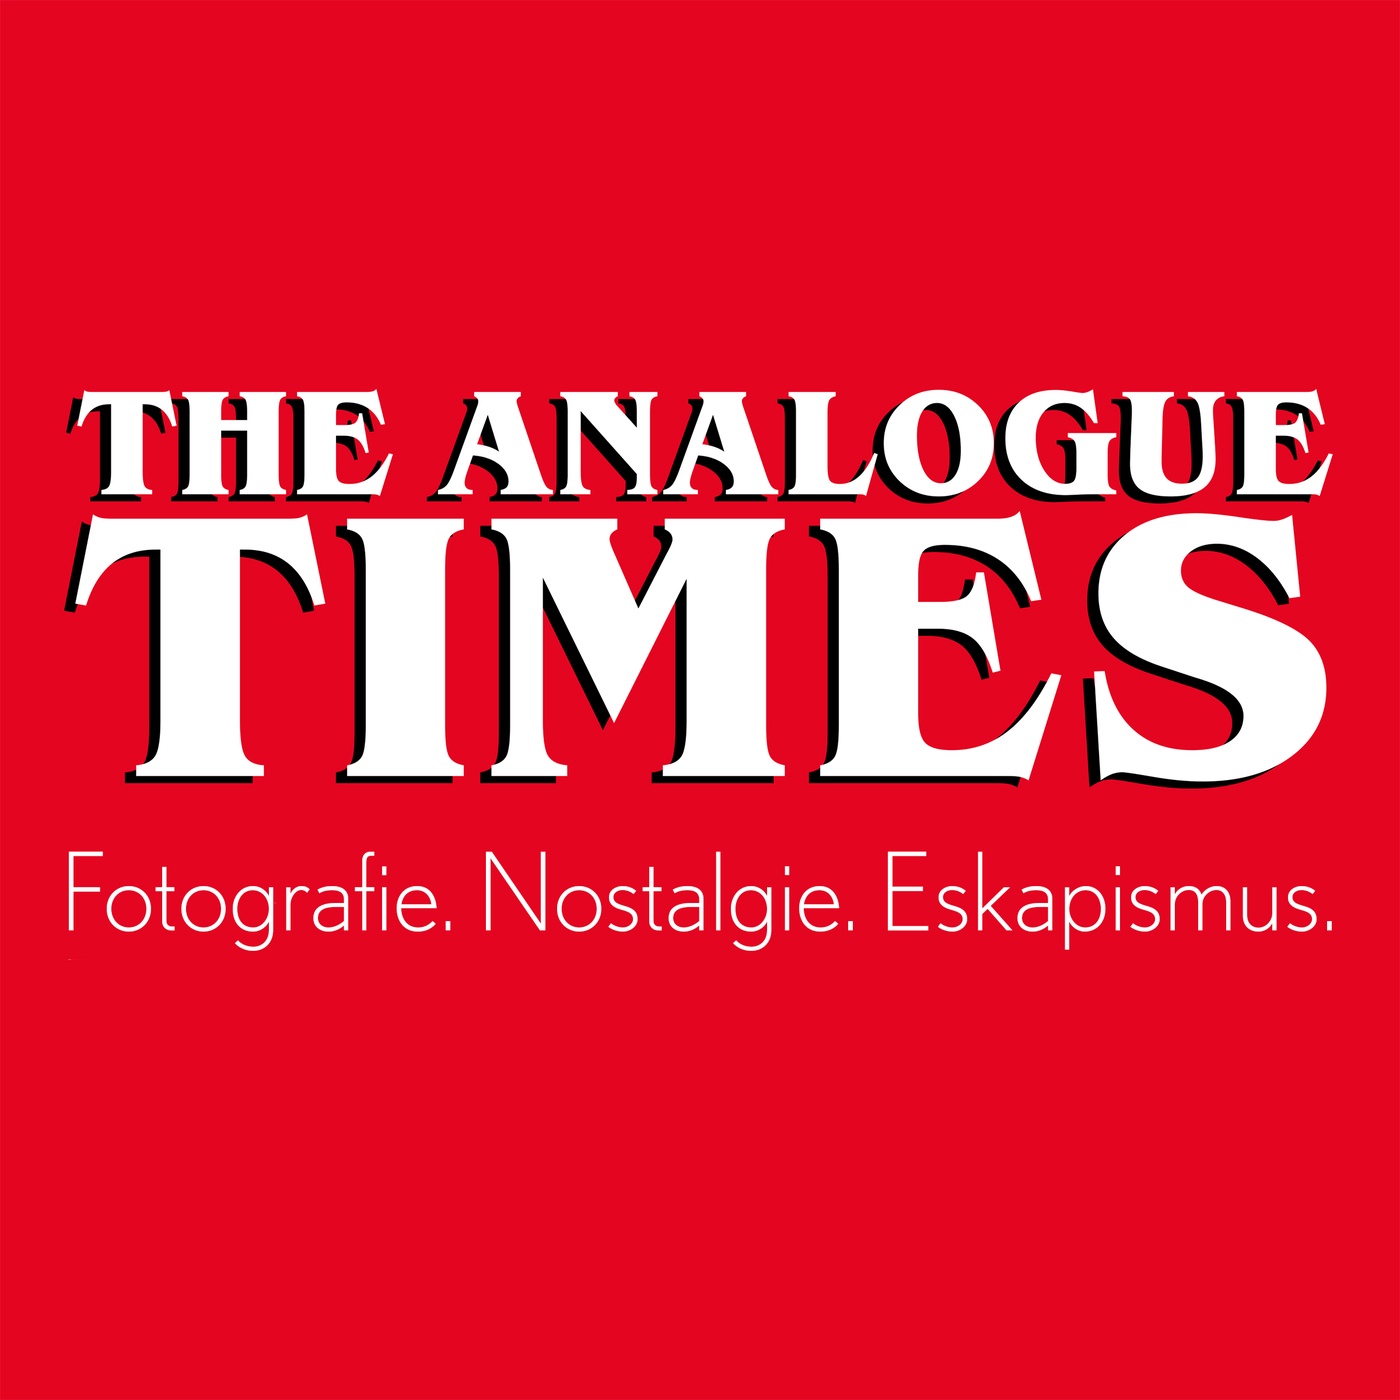 The Analogue Times - Fotografie. Nostalgie. Eskapismus.